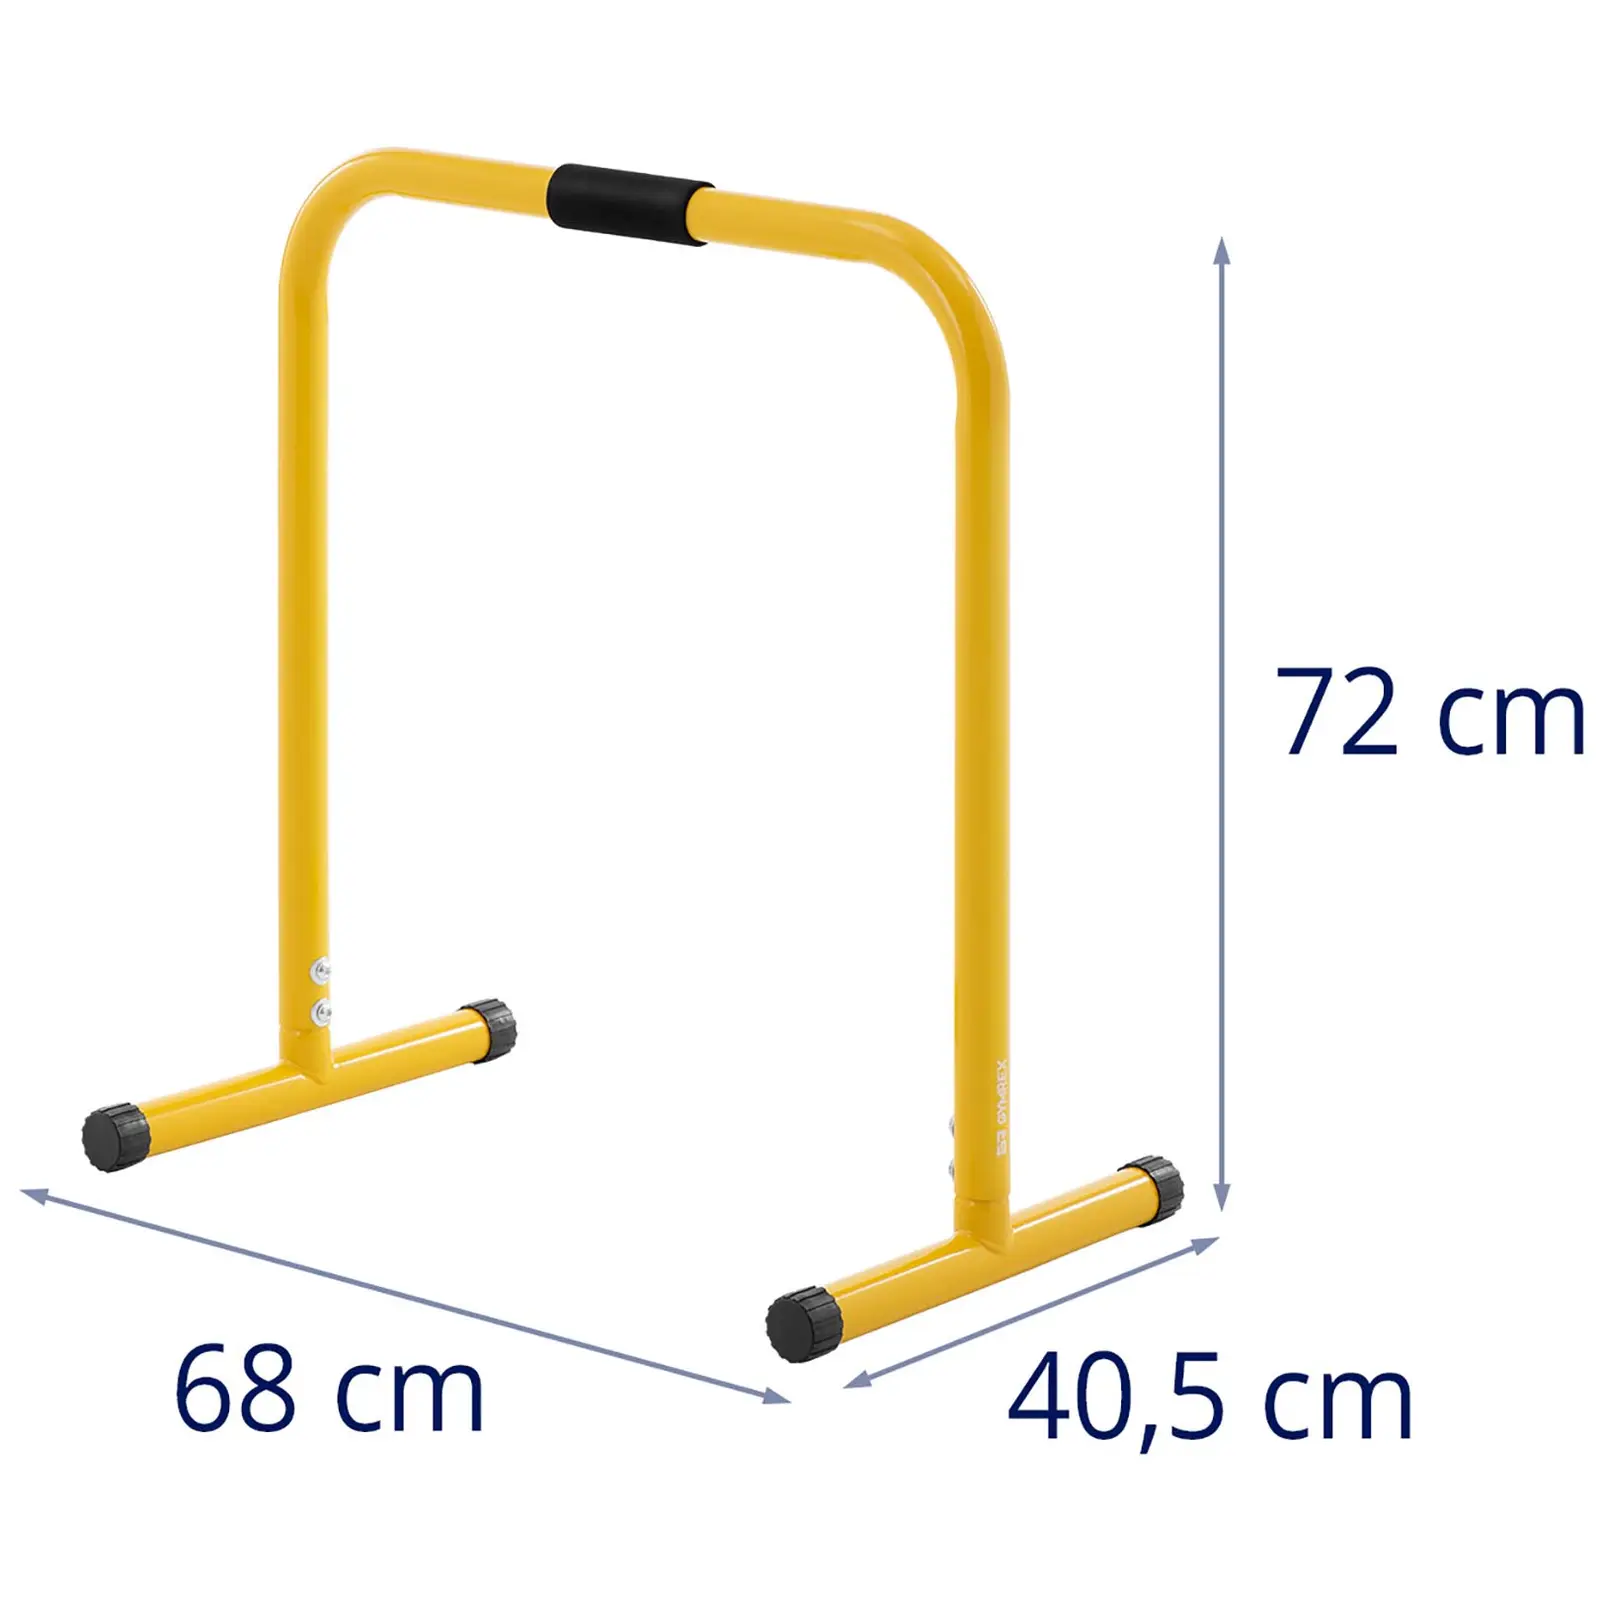 Dip Bars - padded handles - 100 kg